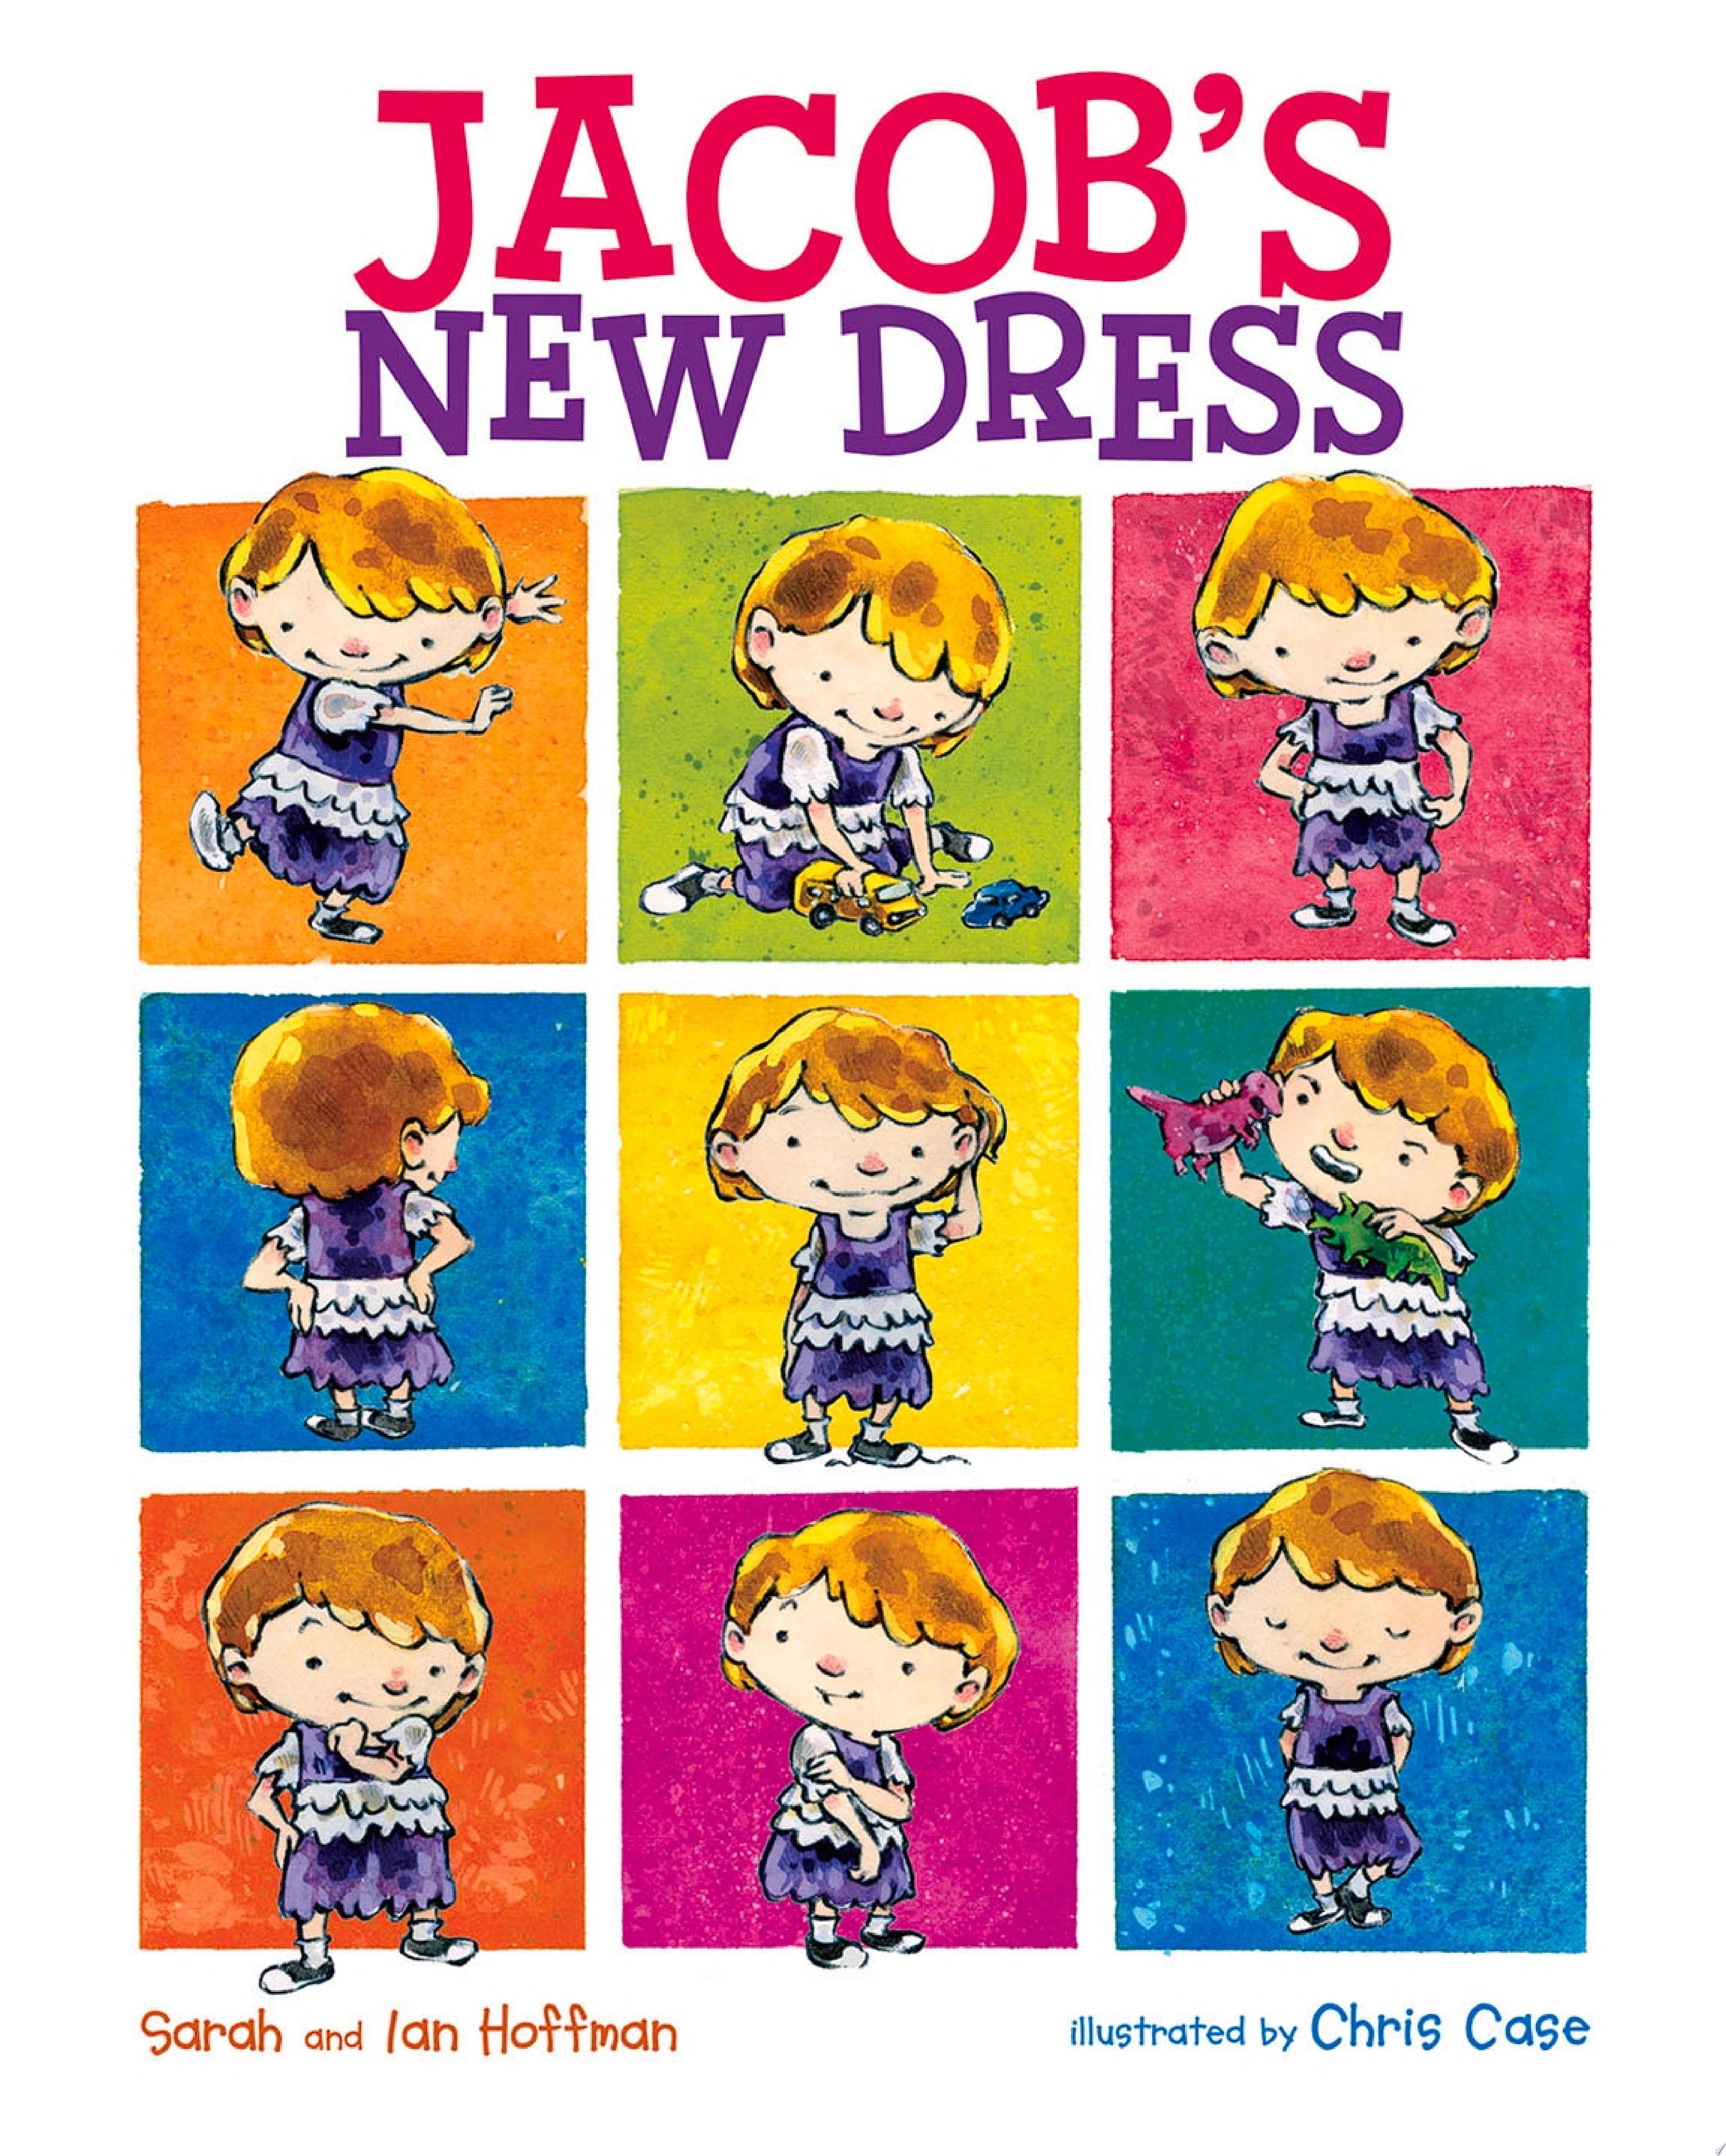 Image for "Jacob's New Dress"